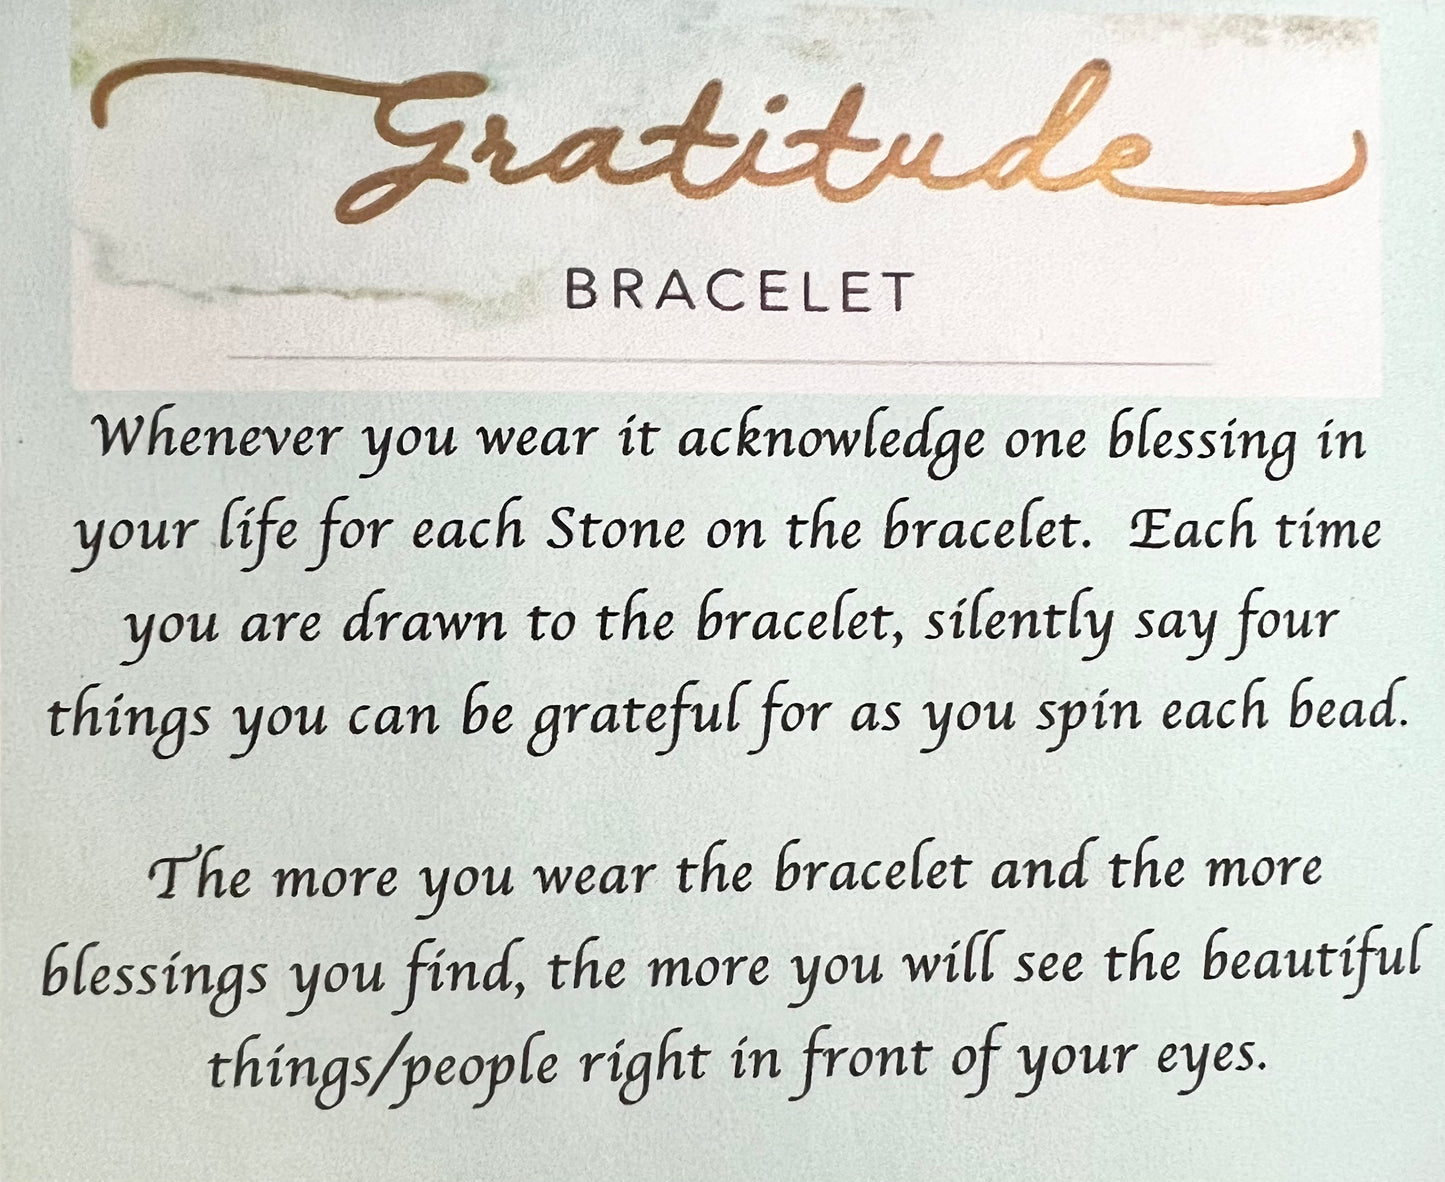 Rose Quartz Gratitude Bracelet